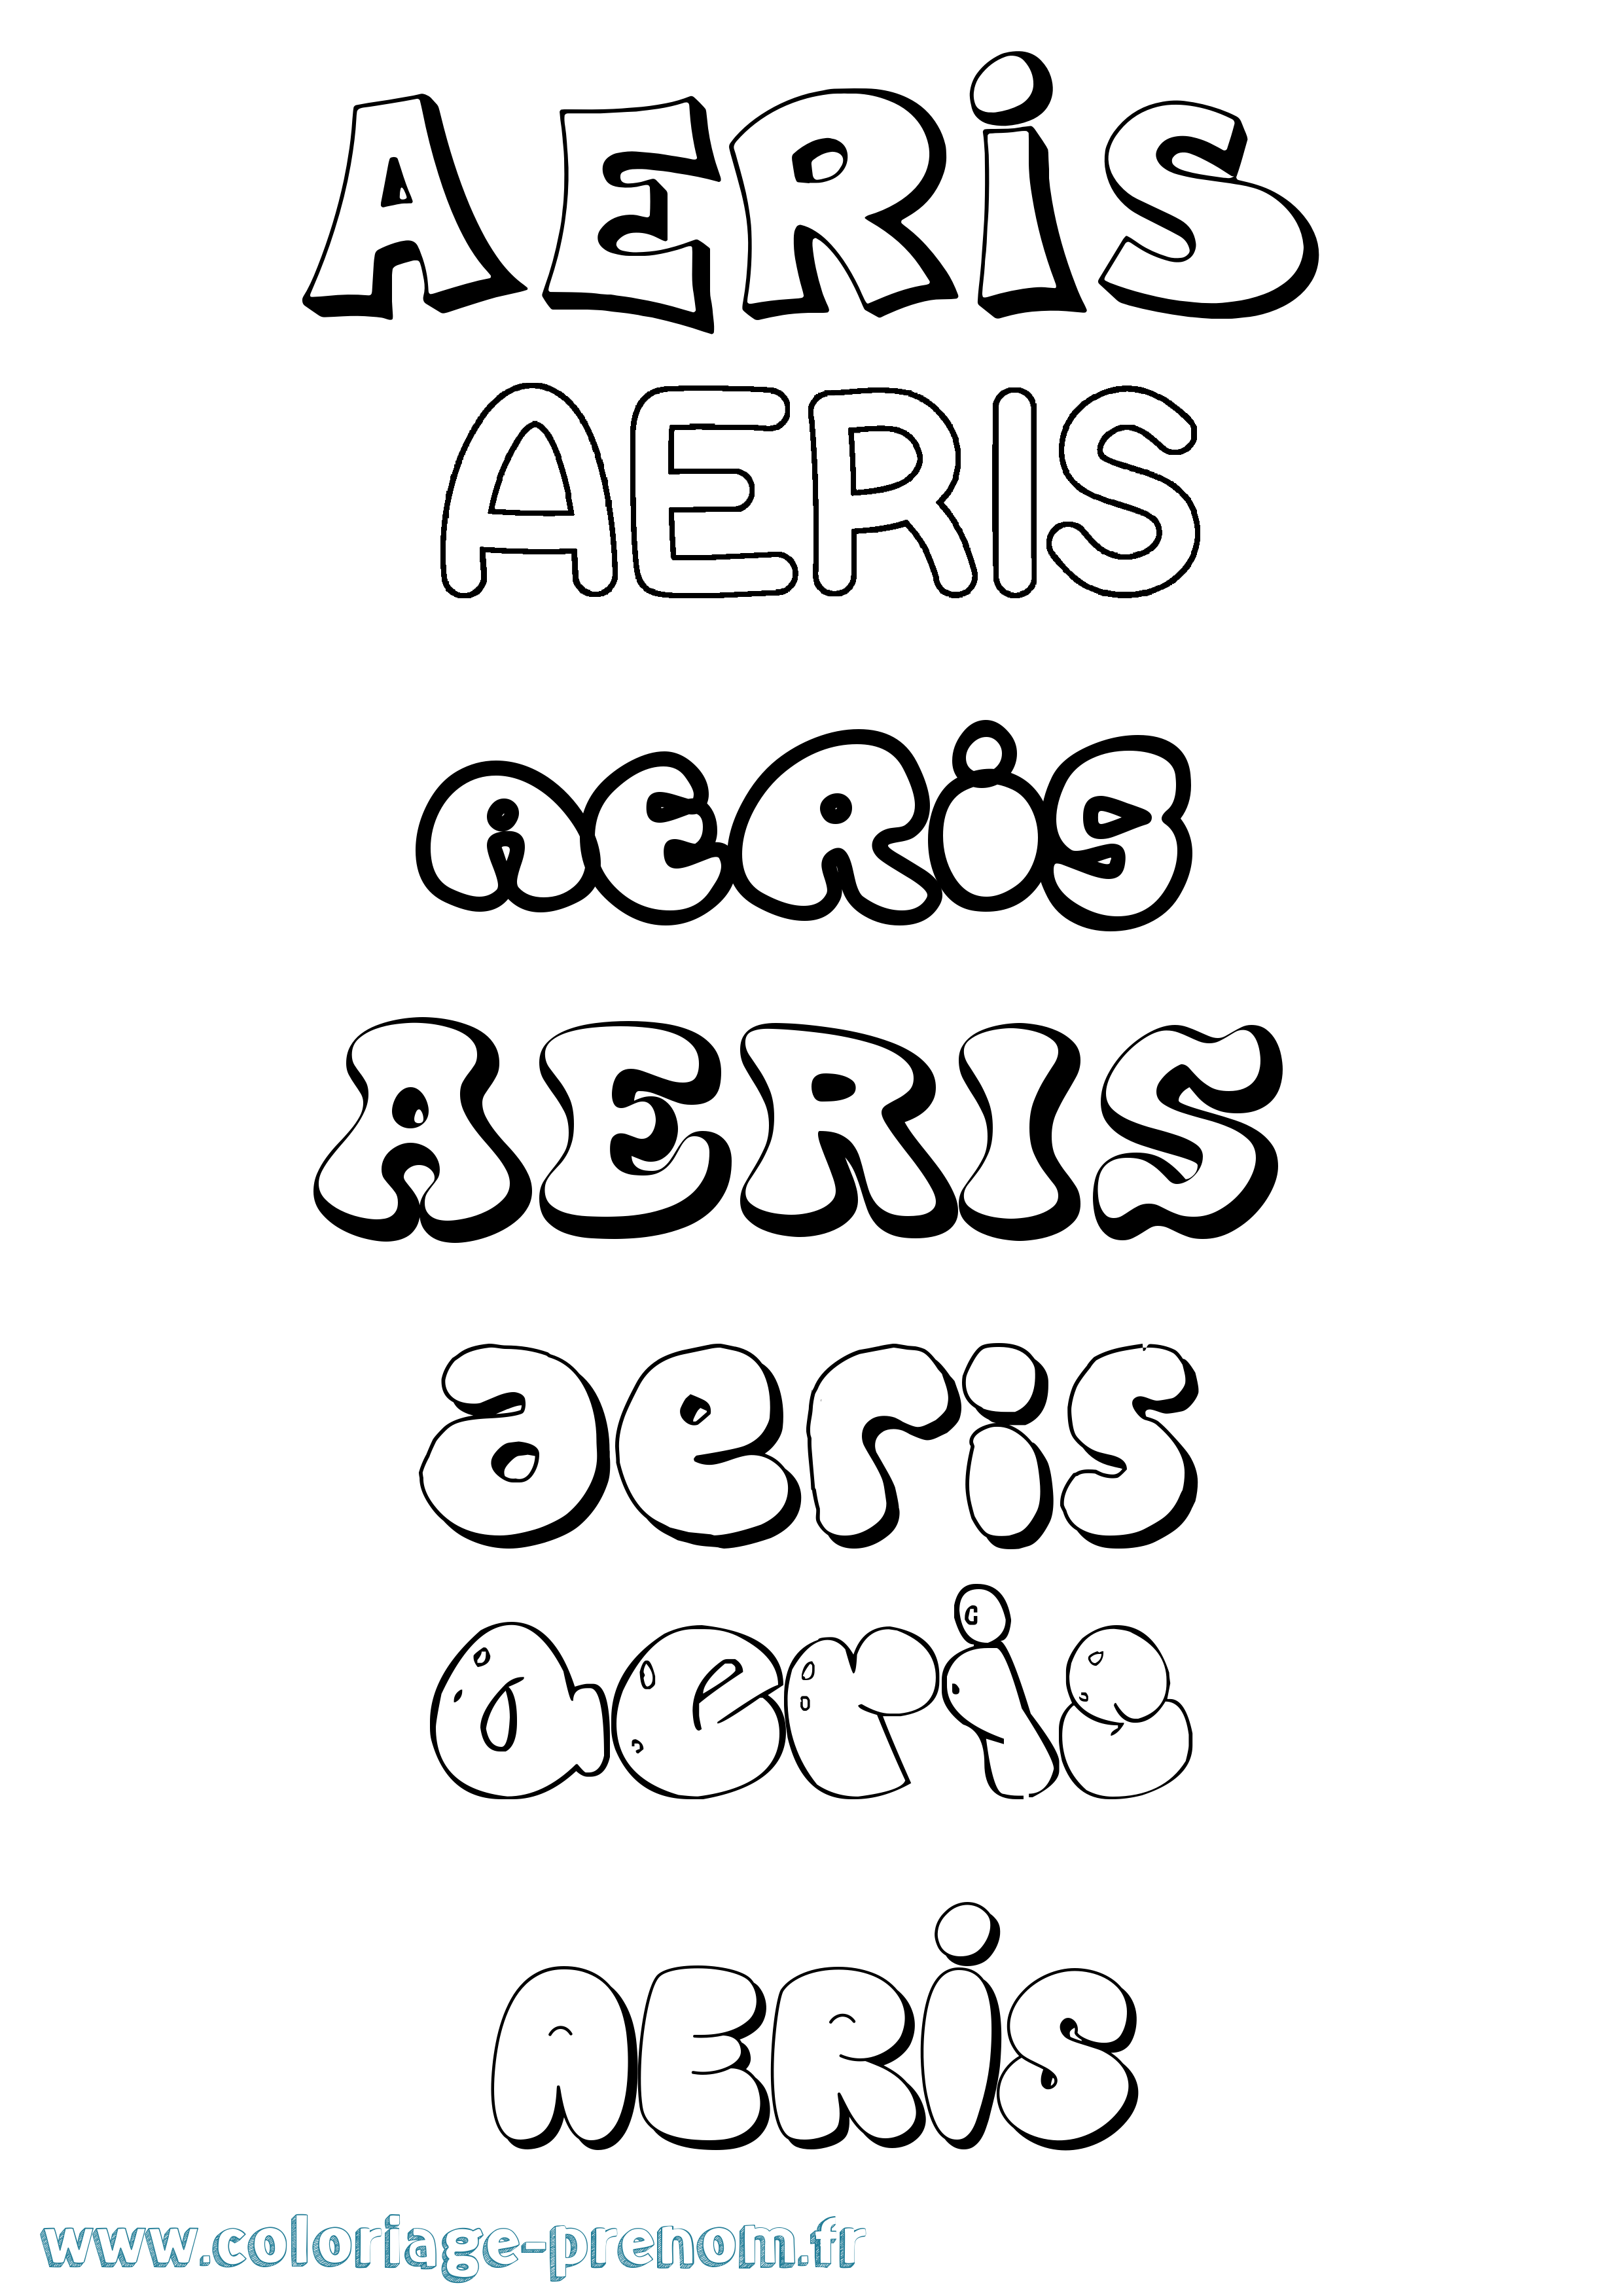 Coloriage prénom Aeris Bubble